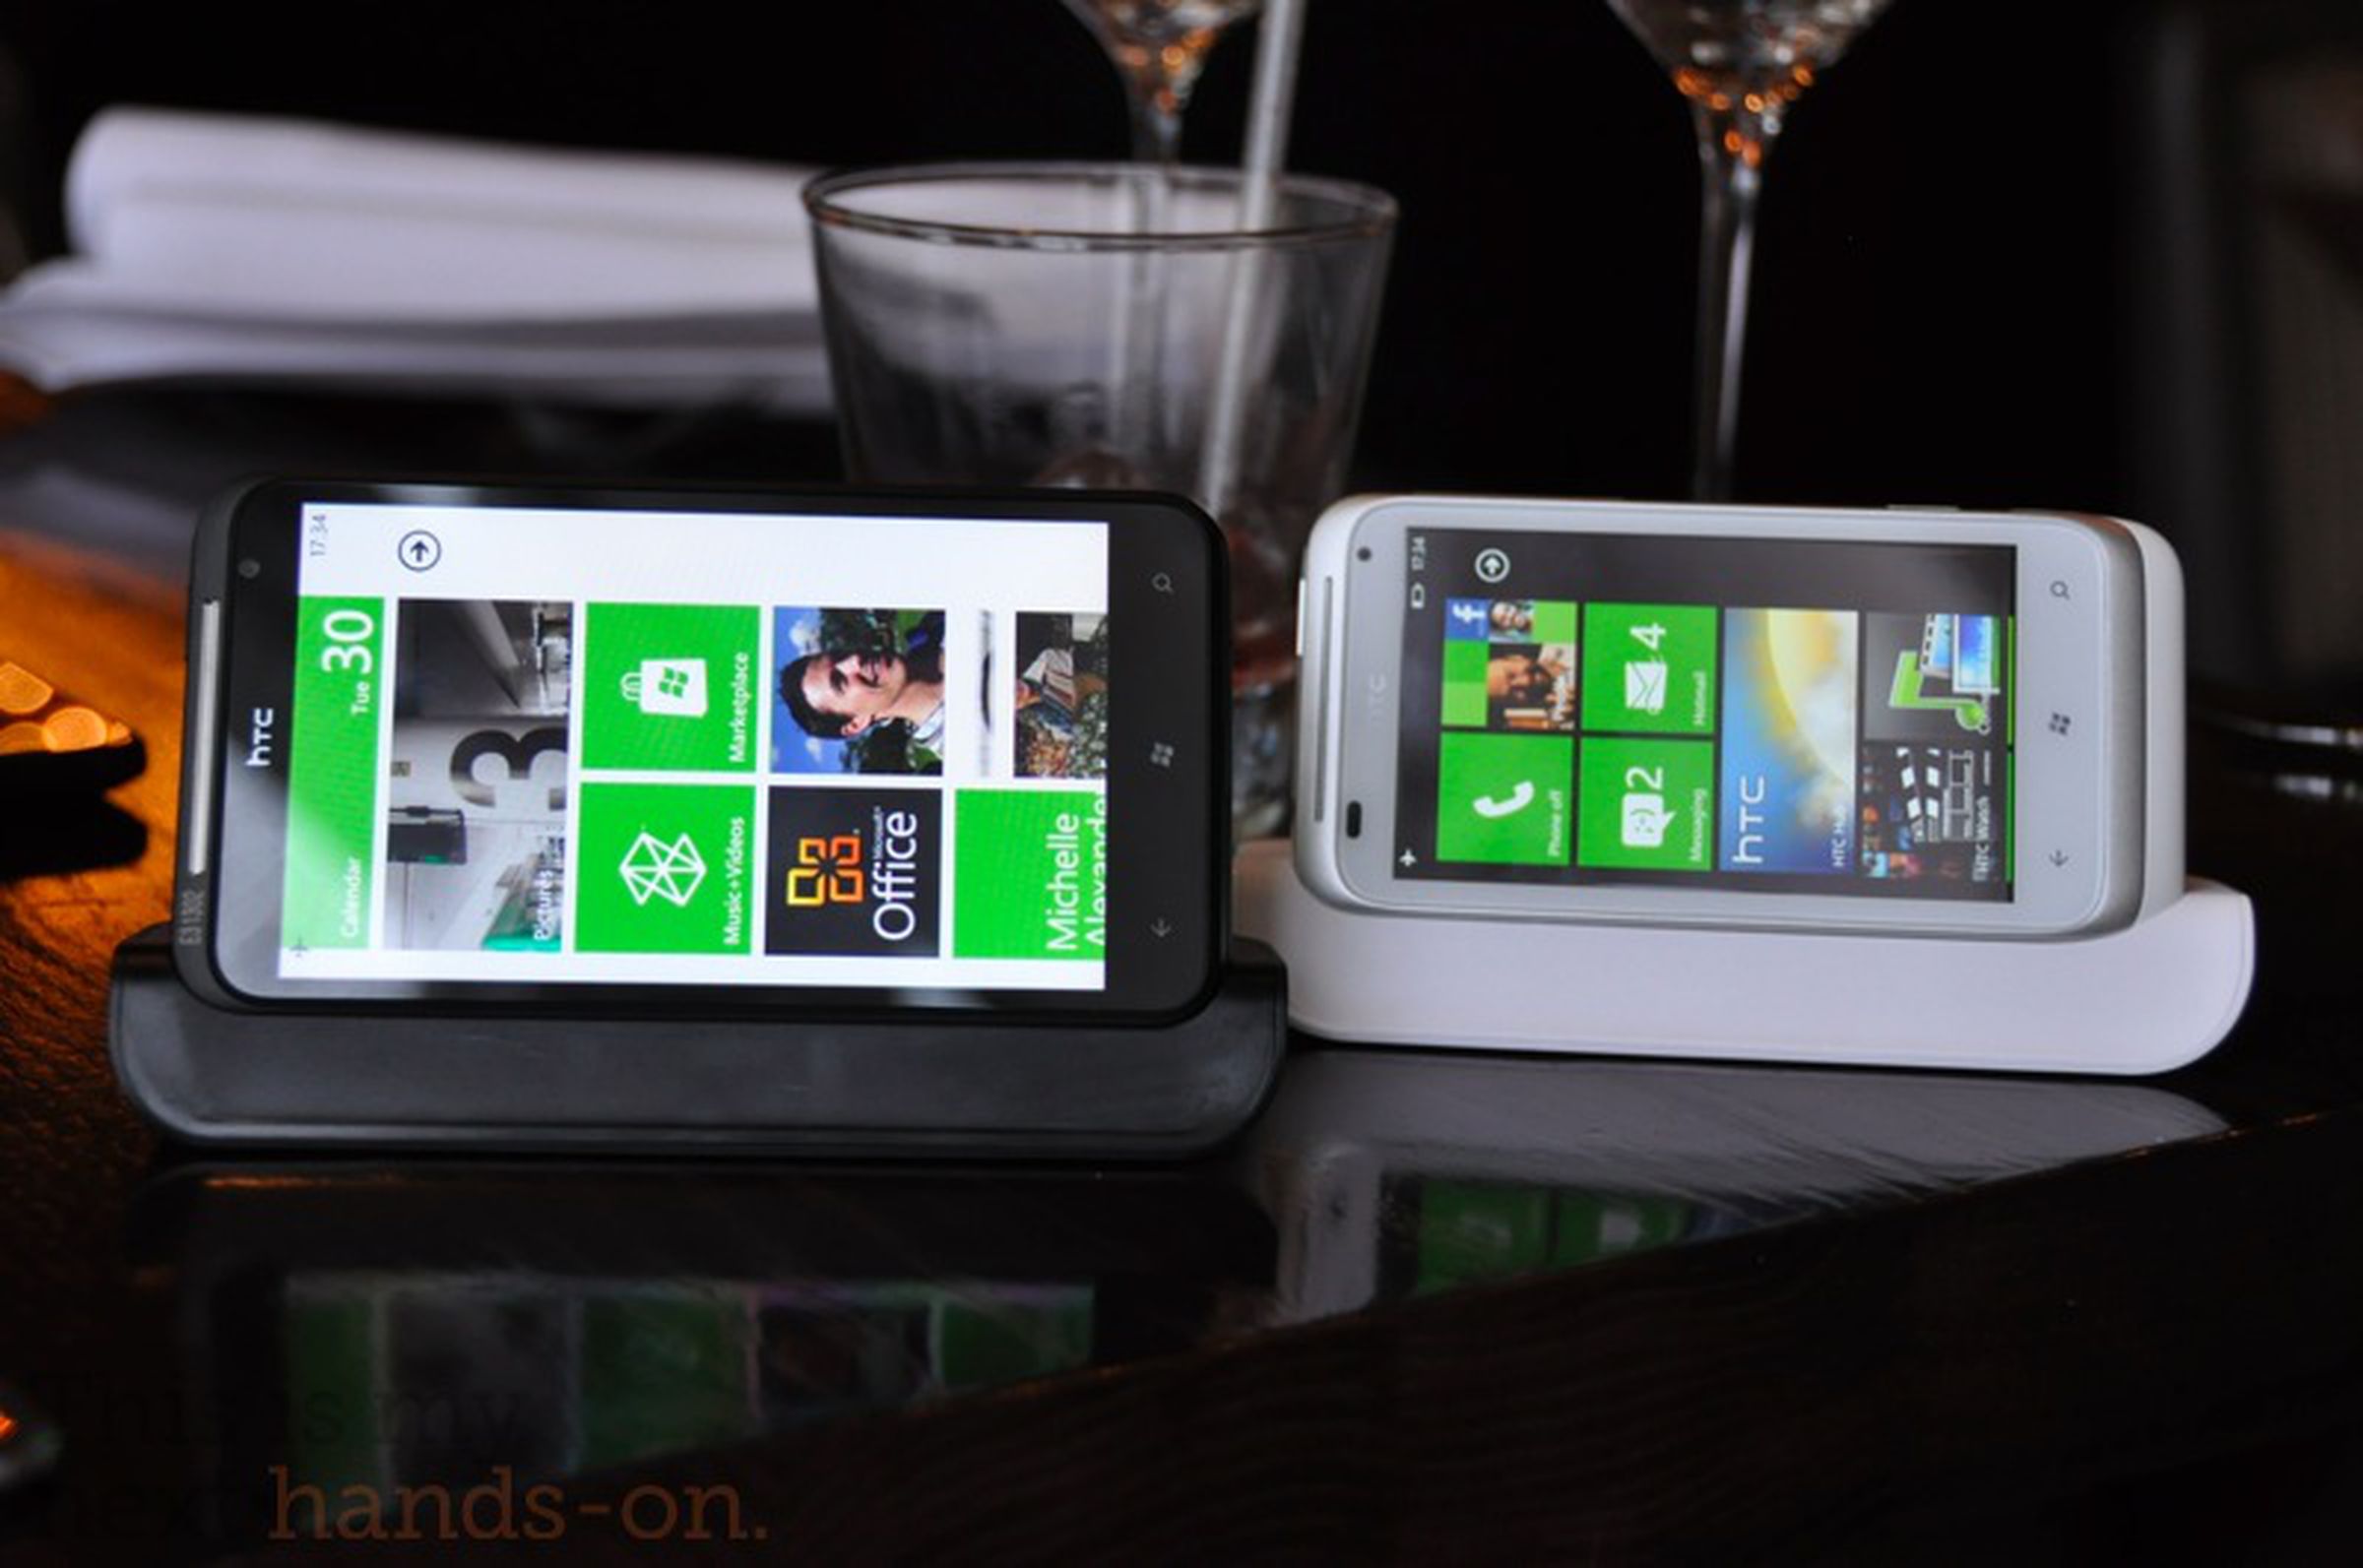 HTC Titan hands-on photos